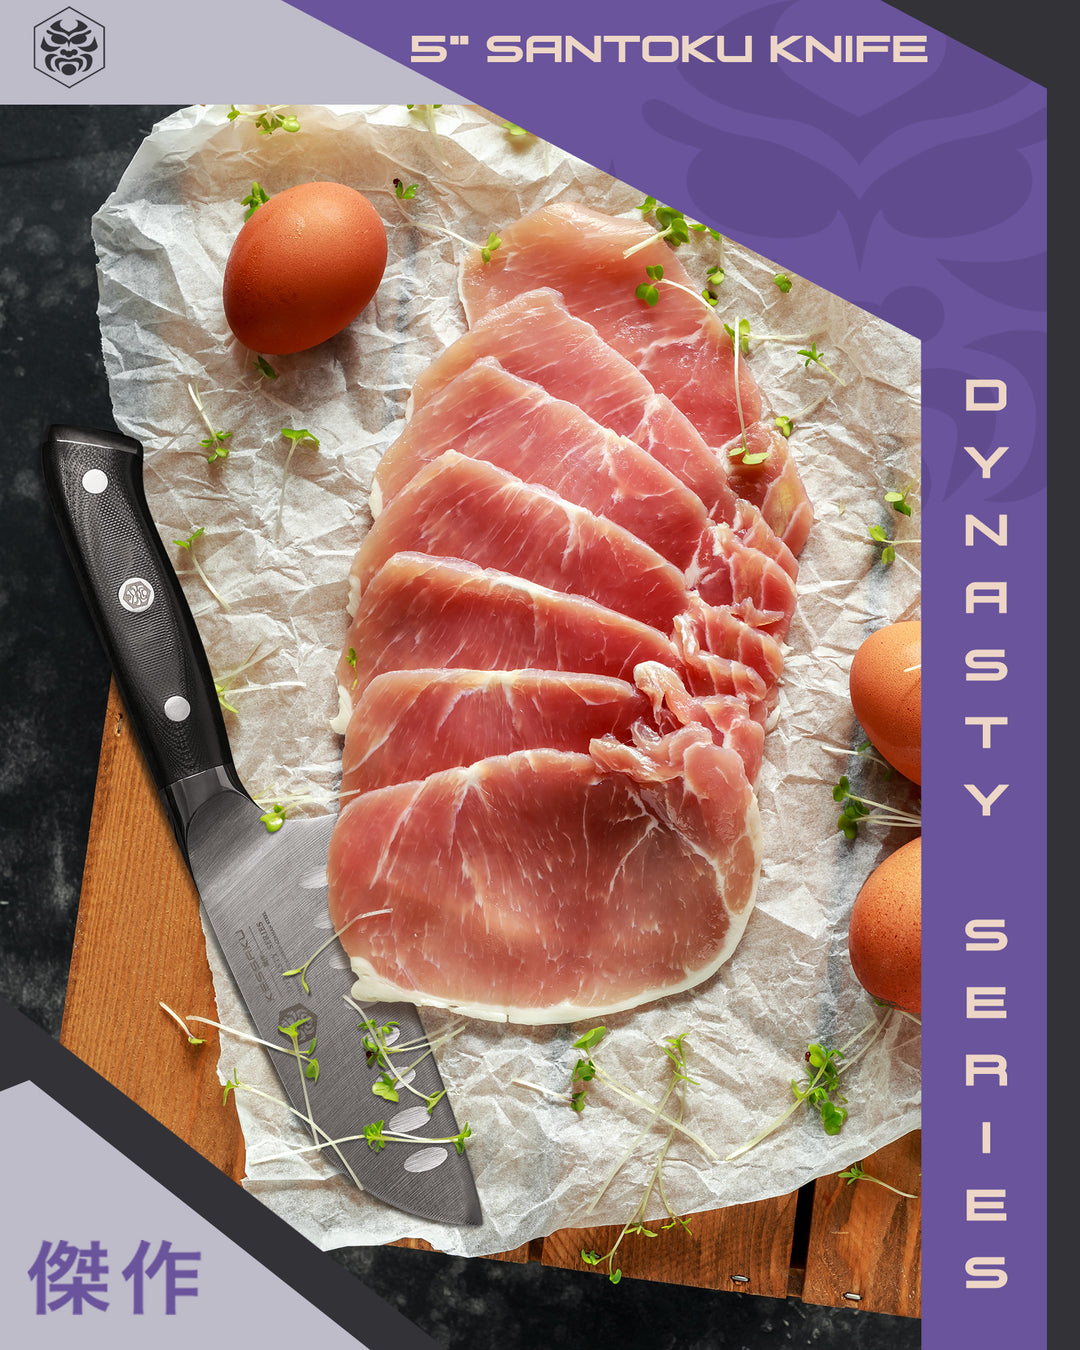 The Dynasty 5" Santoku Knife with sliced pork loin